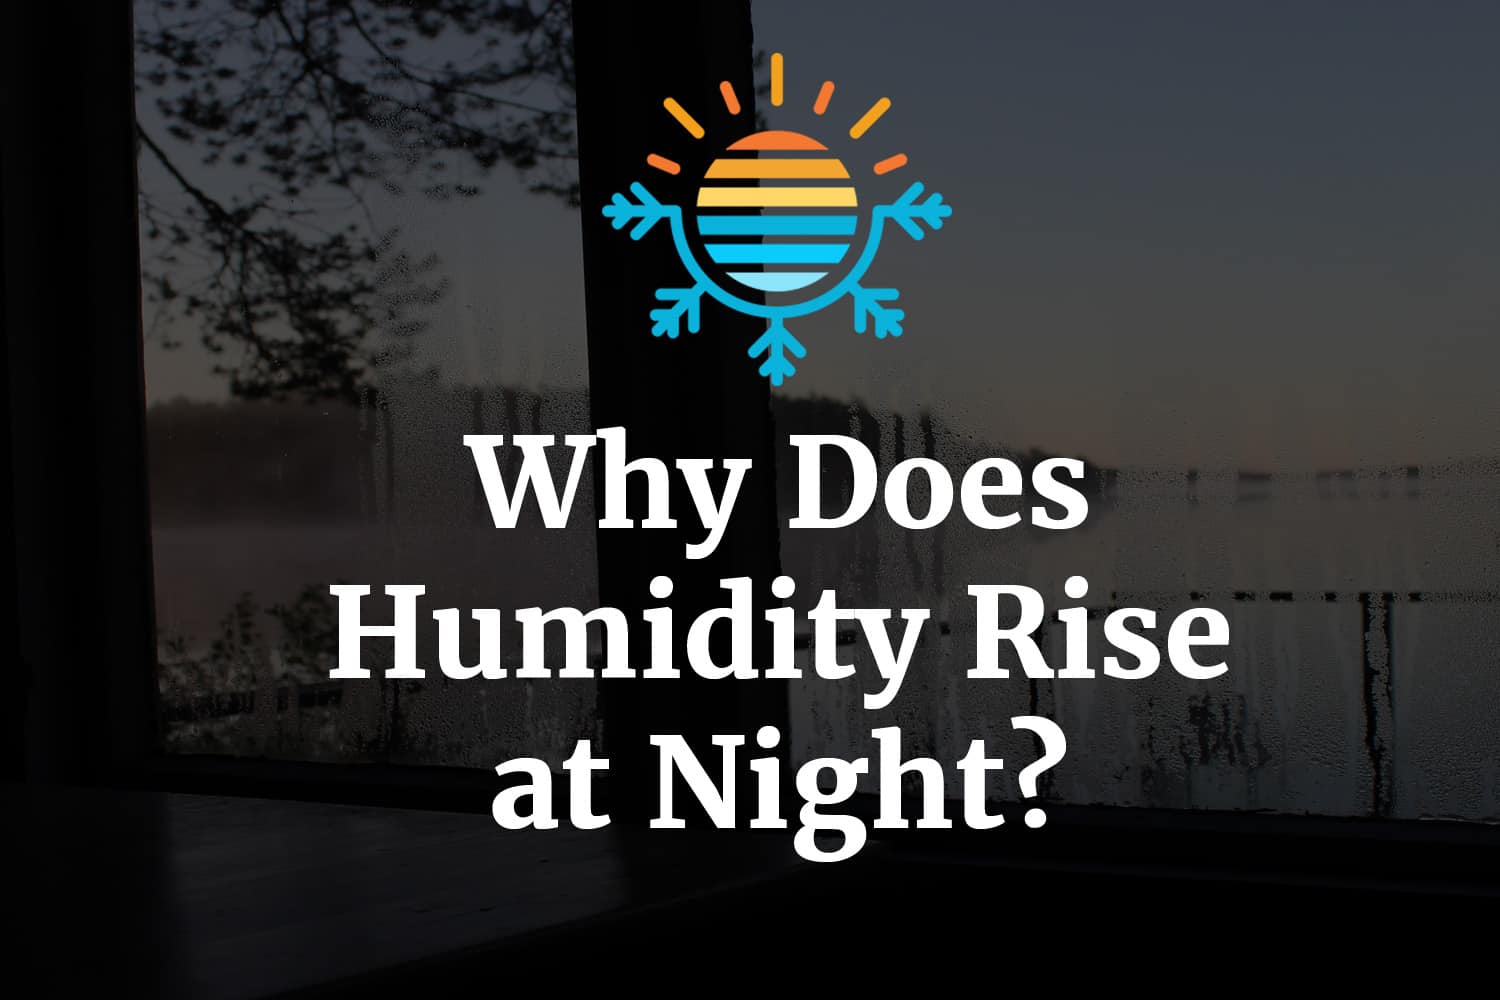 Why does humidity increase at night